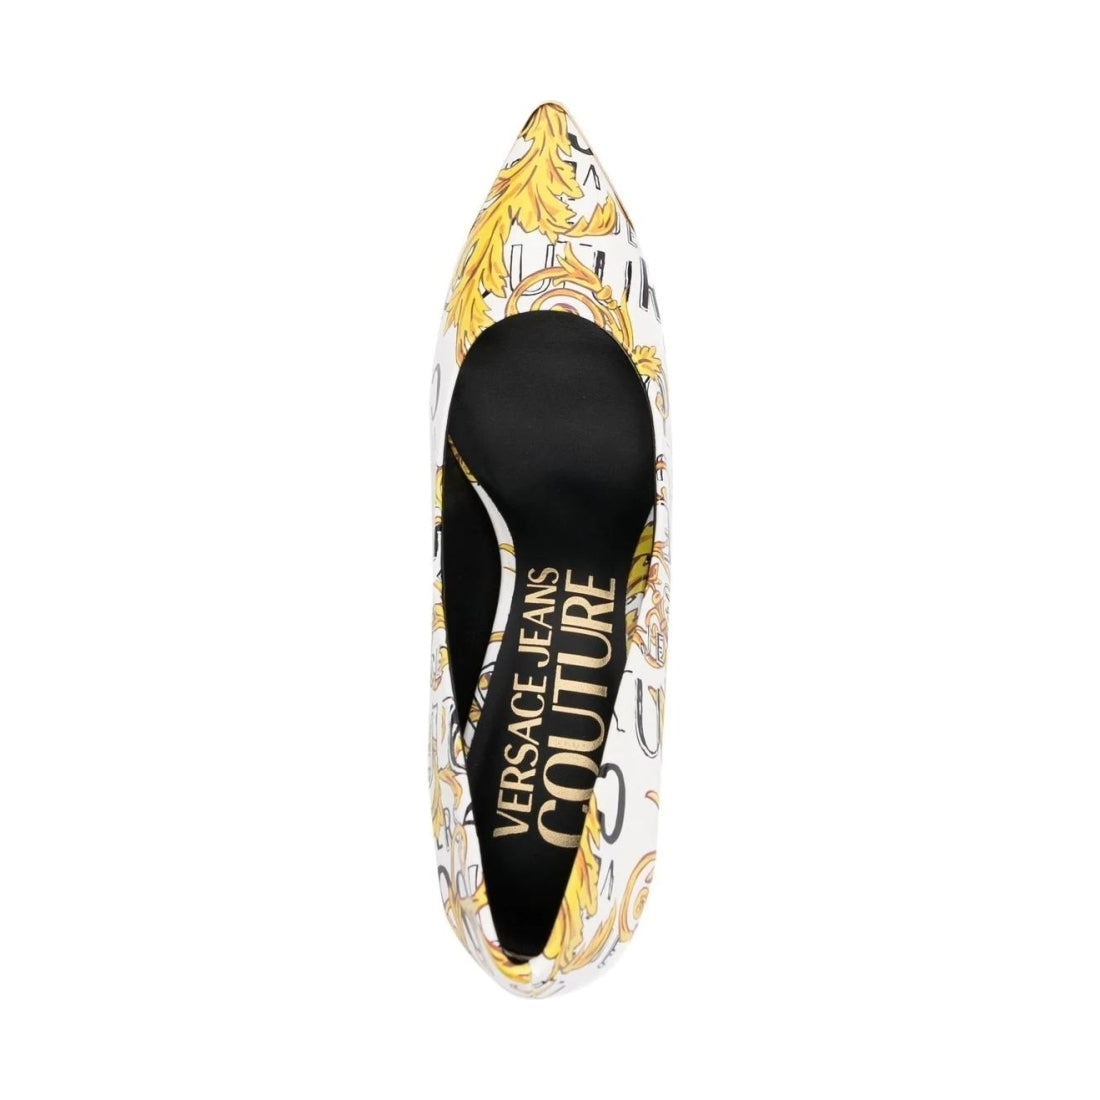 Versace Jeans Couture womens white, gold fondo scarlett shoes | Vilbury London